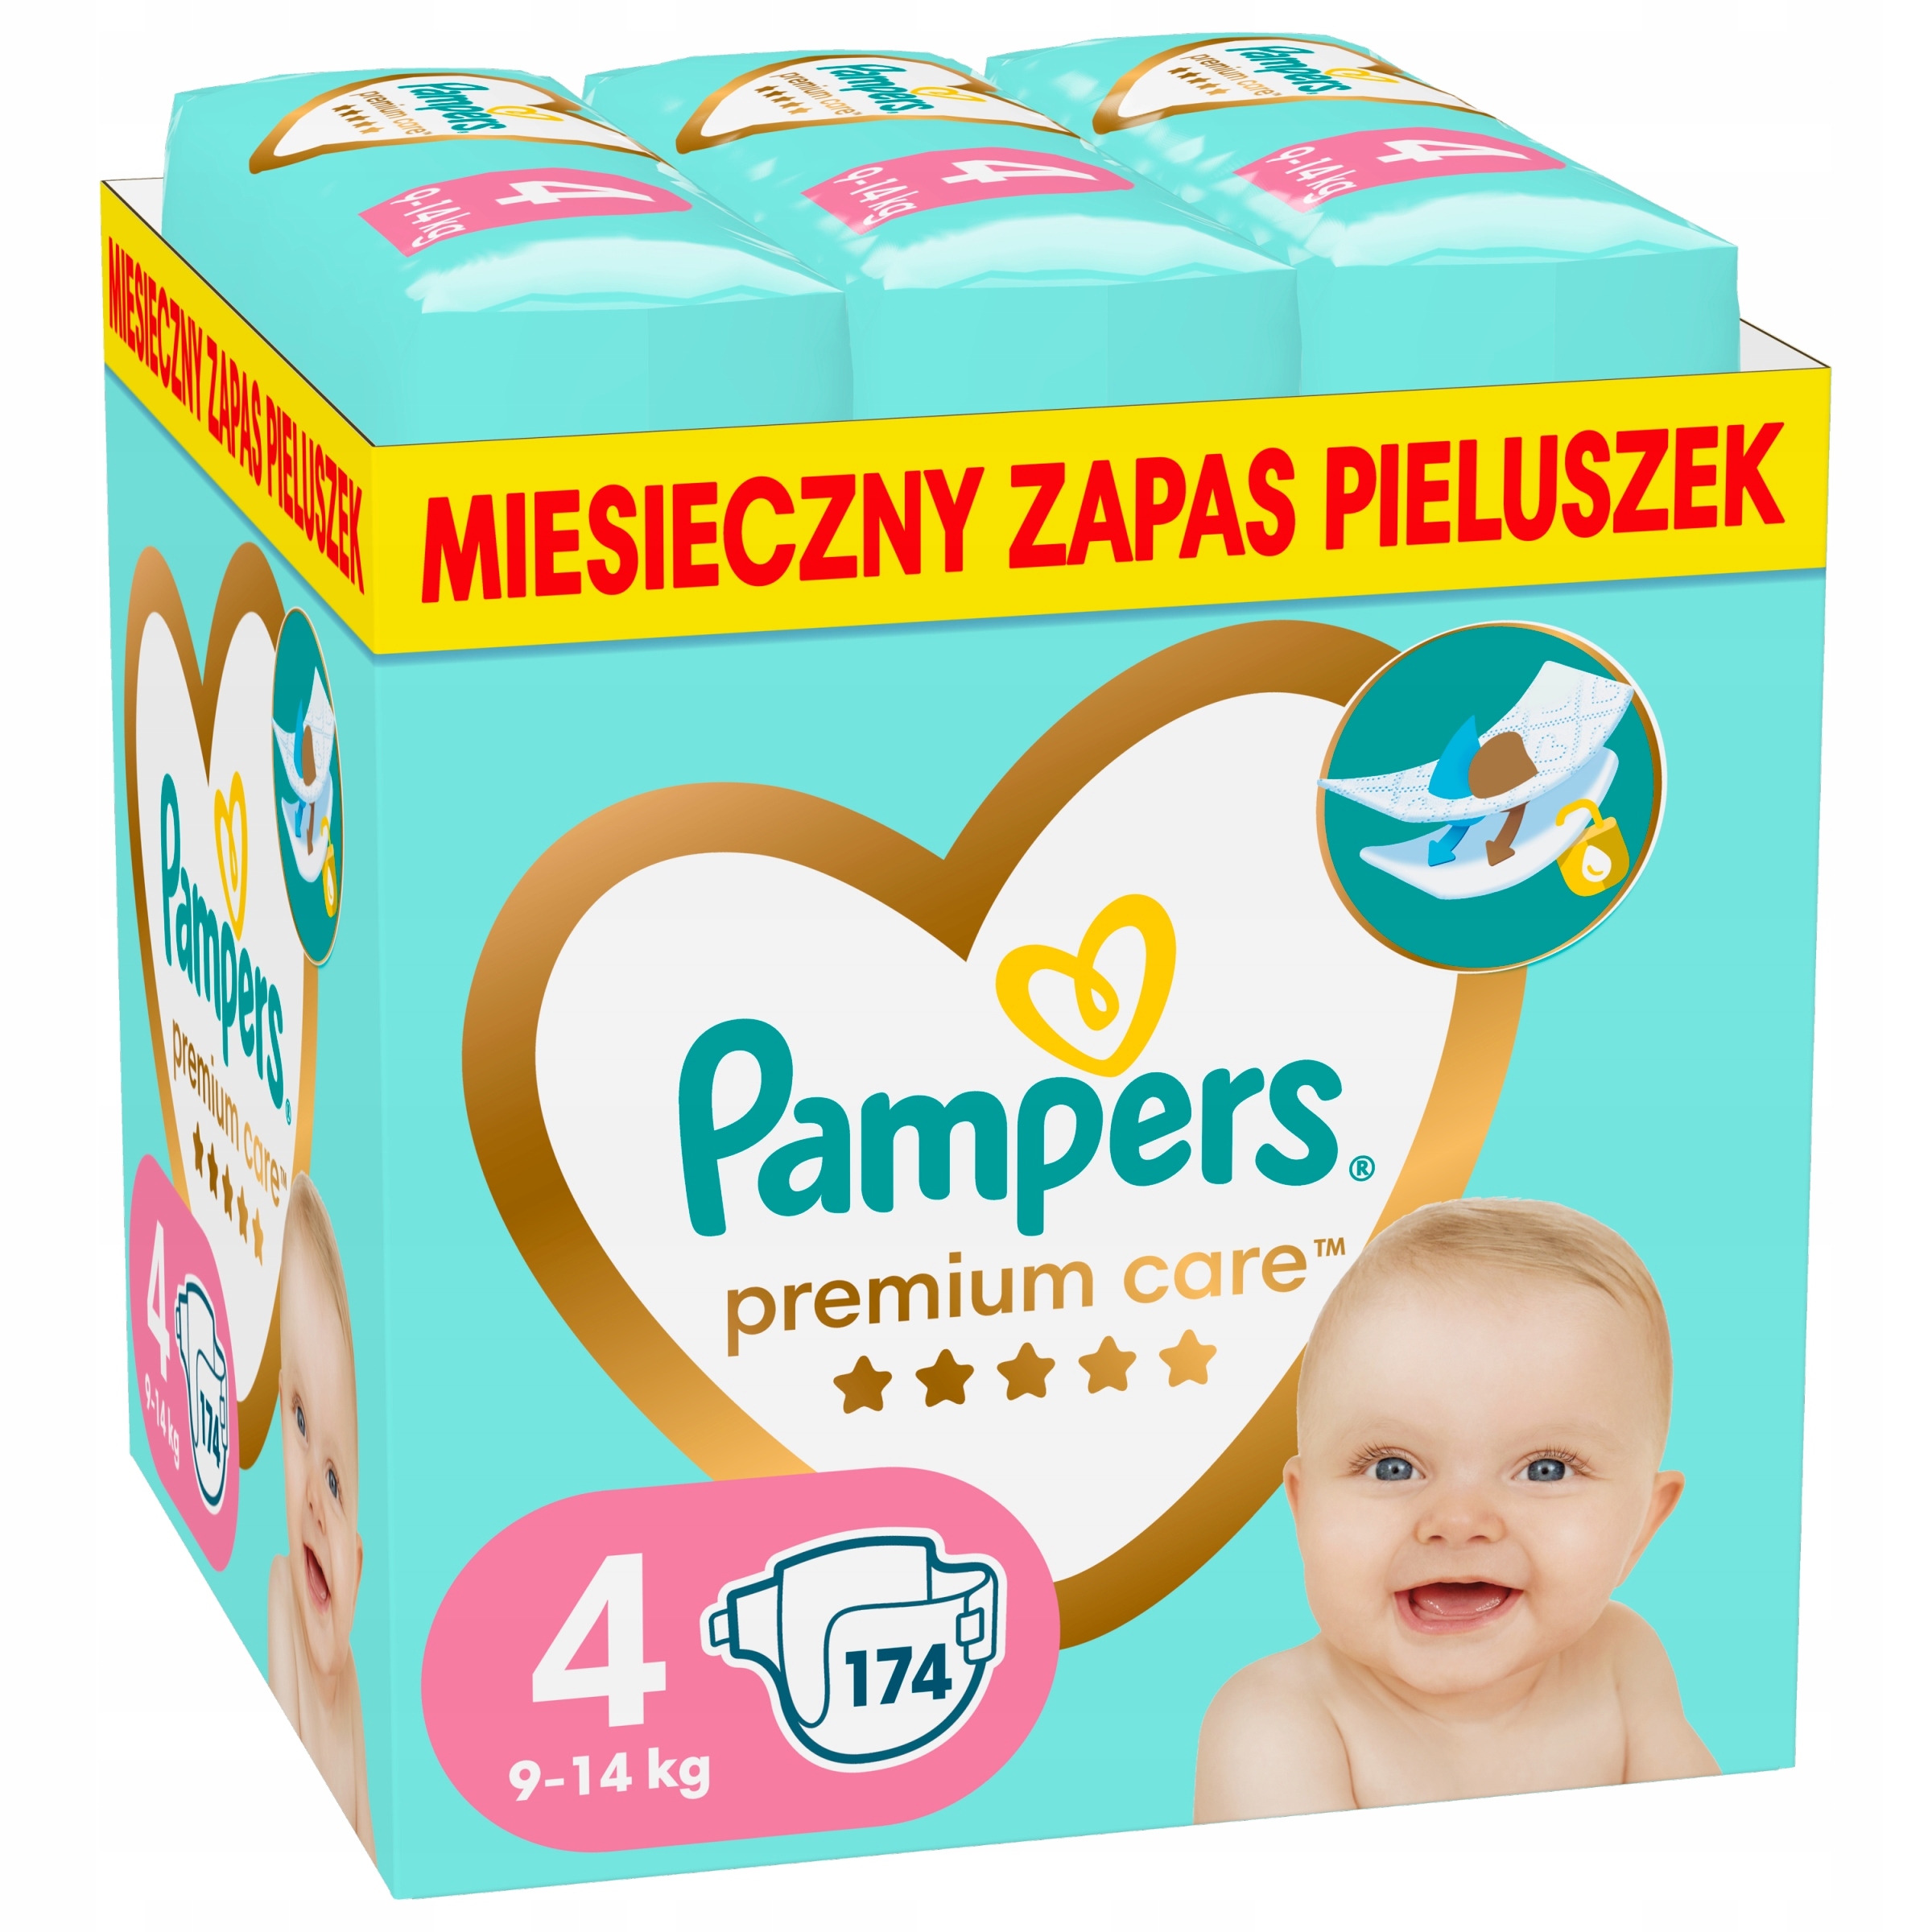 pampers 4 site allegro.pl